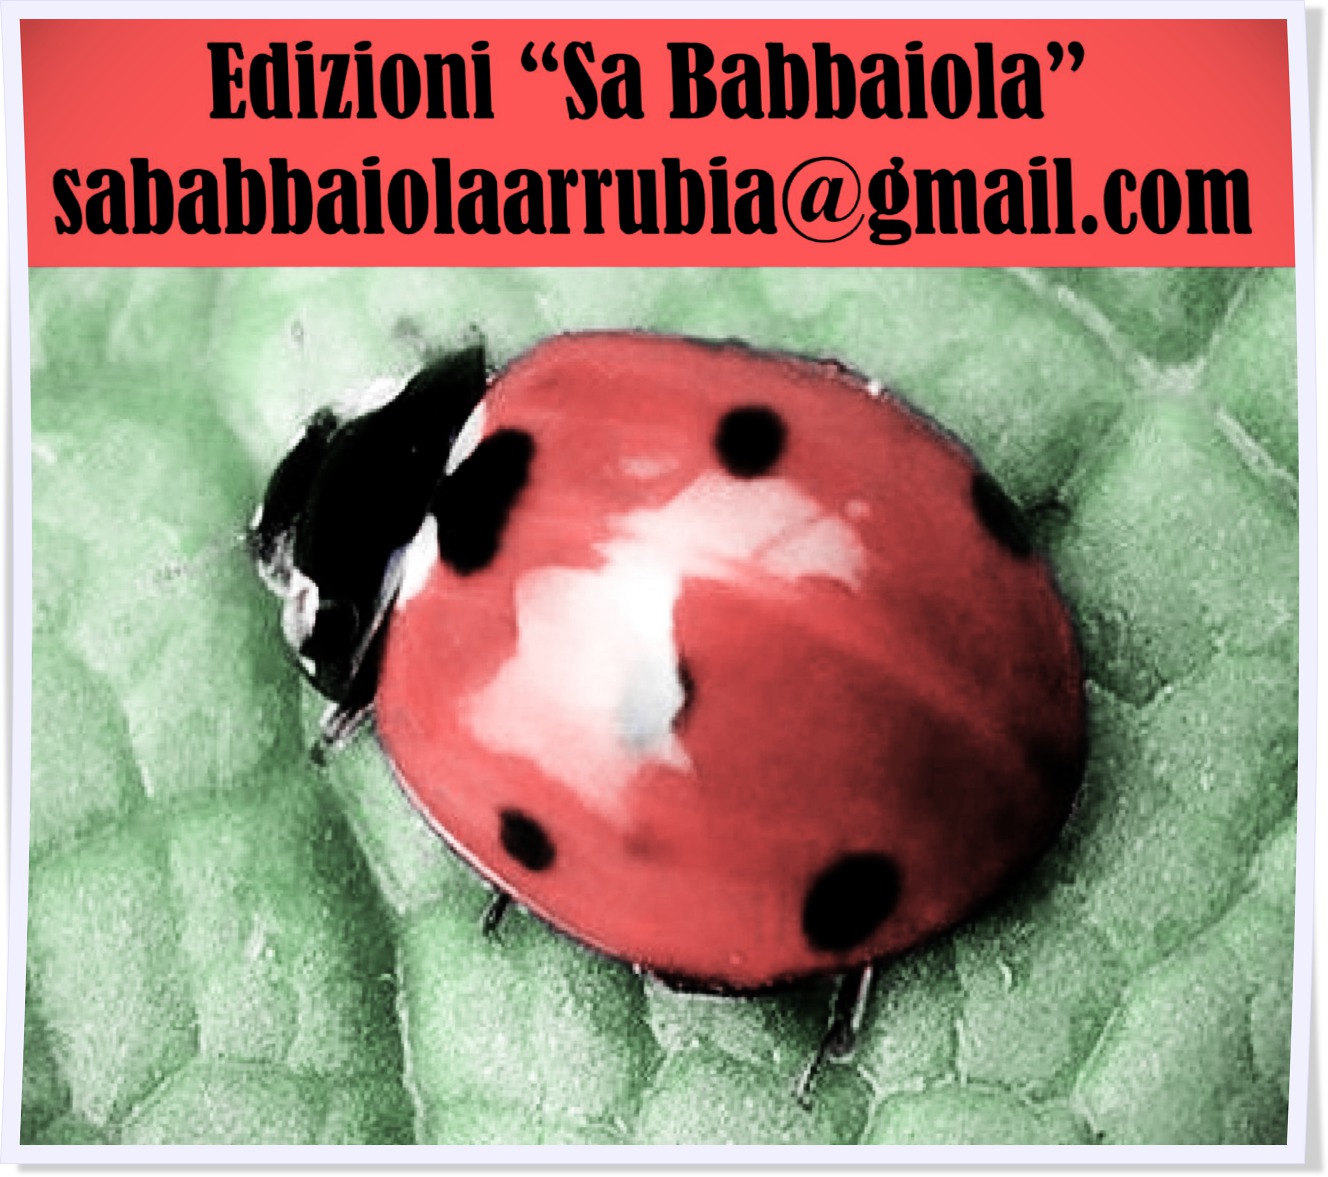 Pagina face book "Sa Babbaiola"